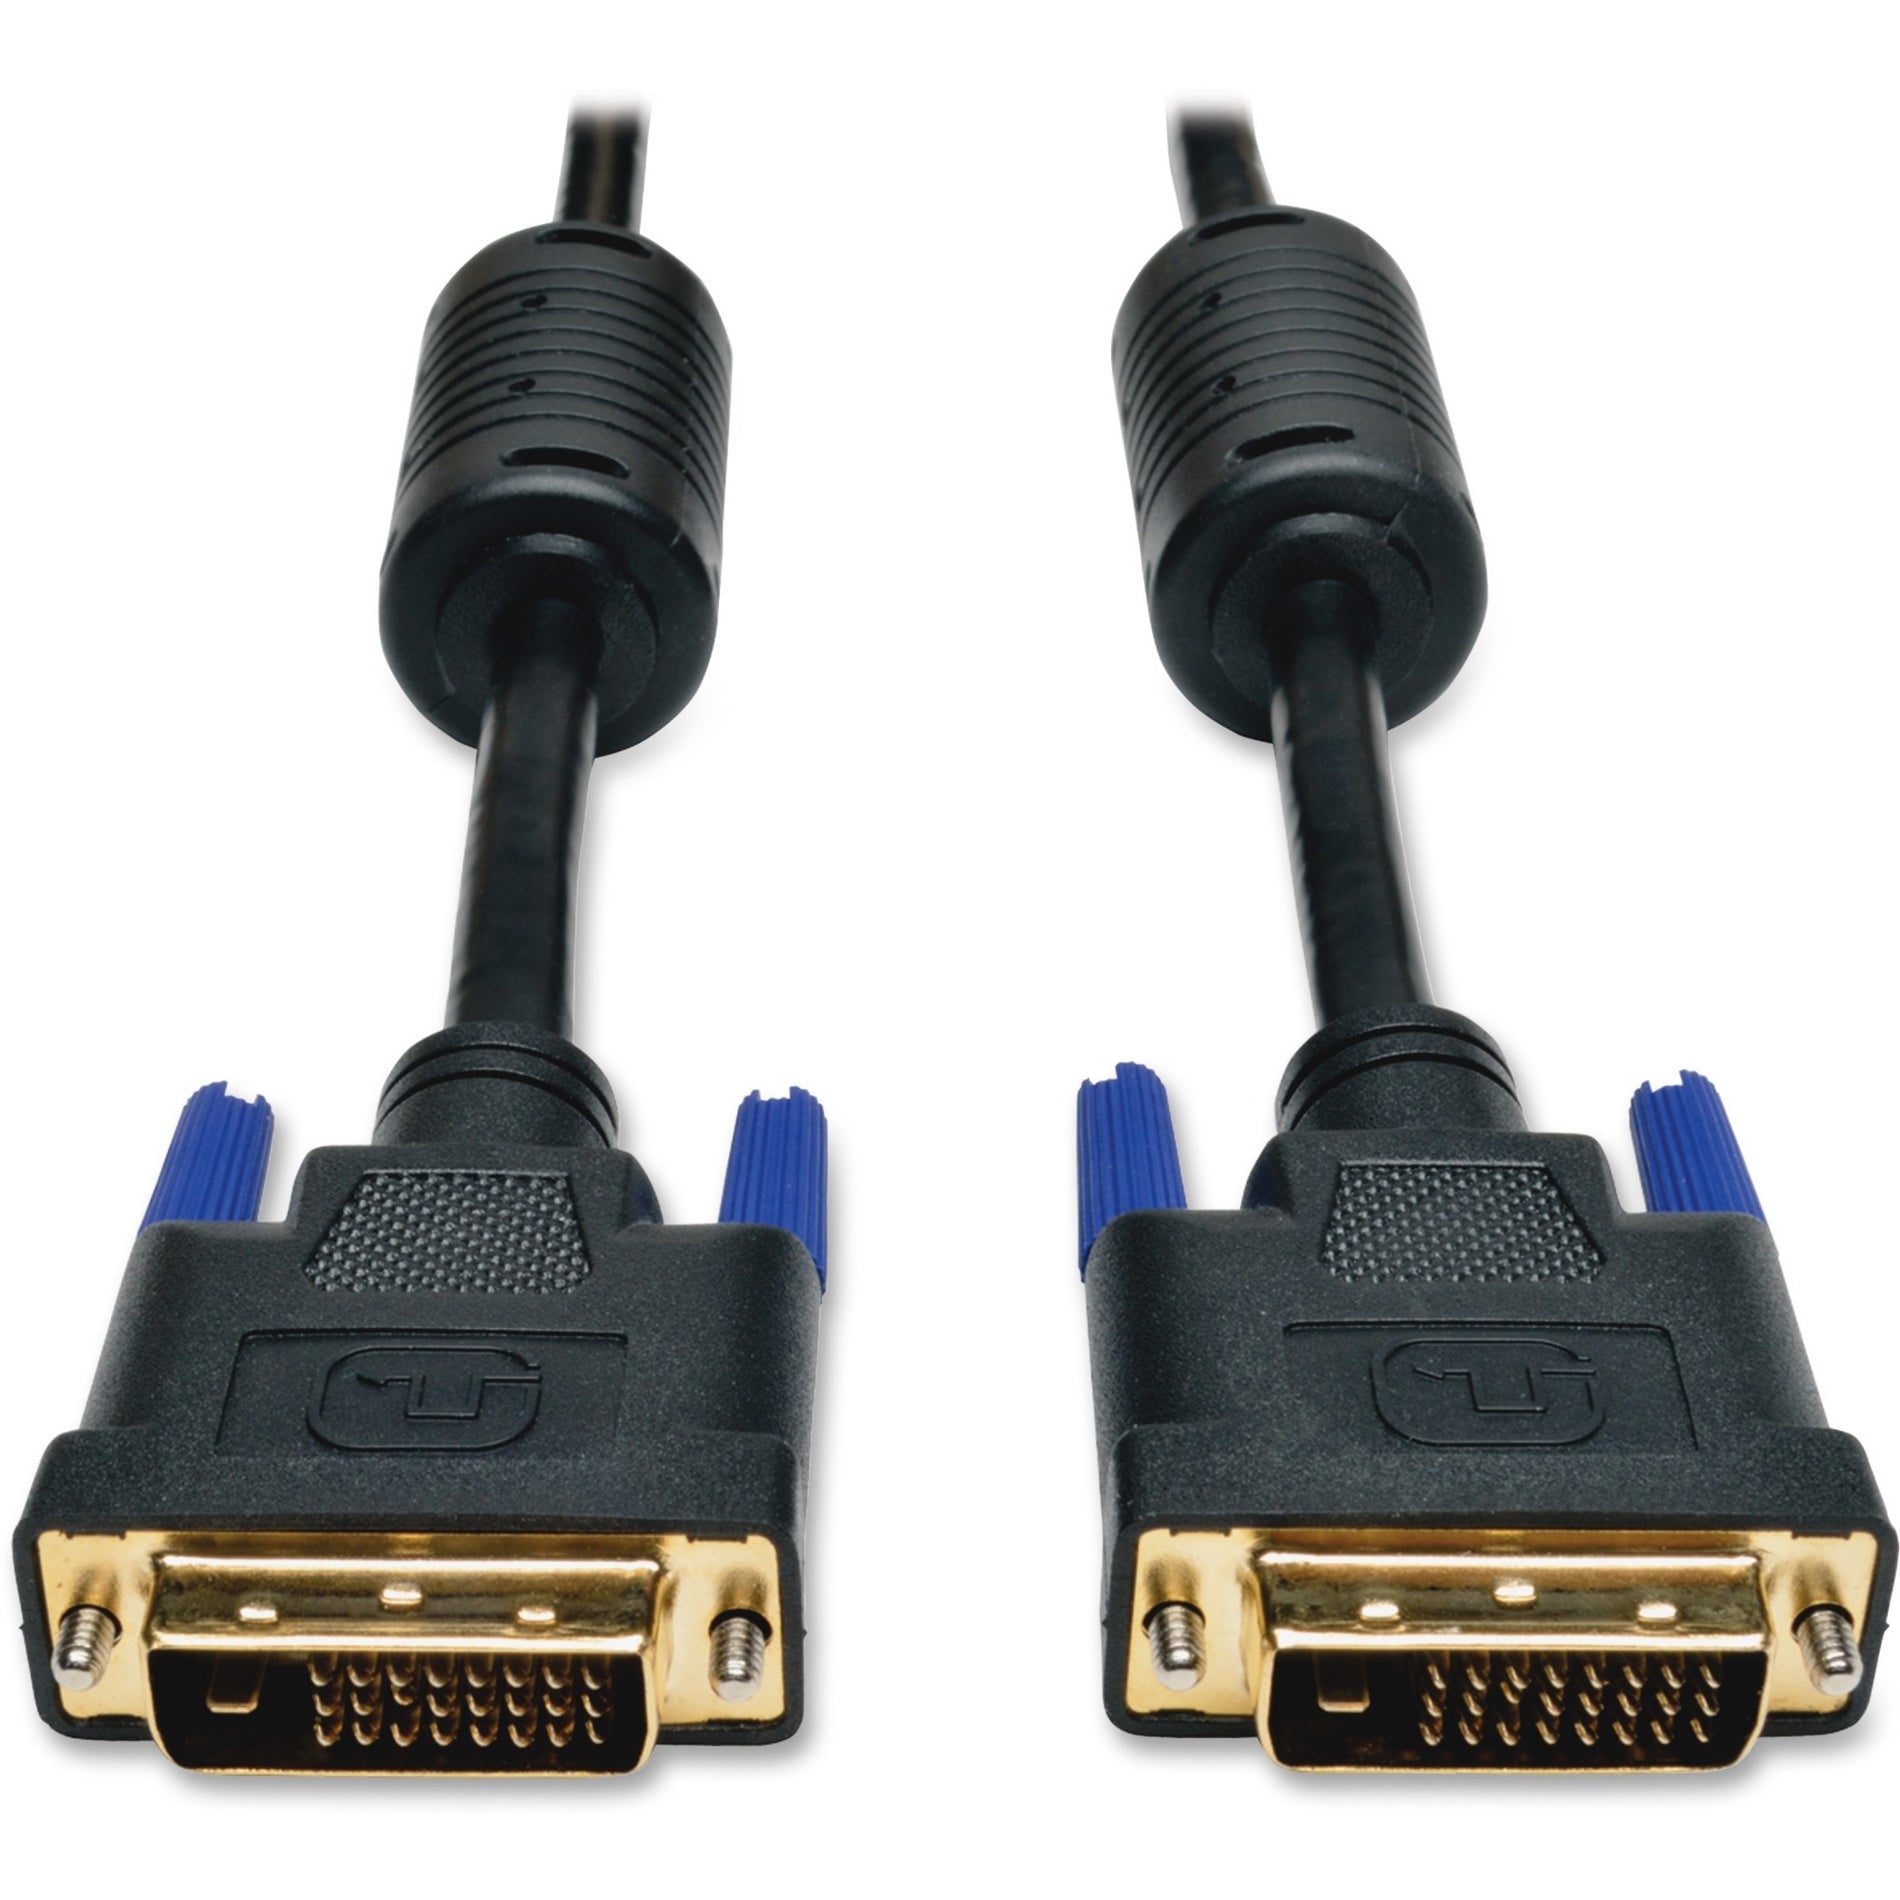 Tripp Lite P560-006 DVI Dual Link Cable 6ft Black トリップライト P560-006 DVI デュアルリンクケーブル、6ft、ブラック